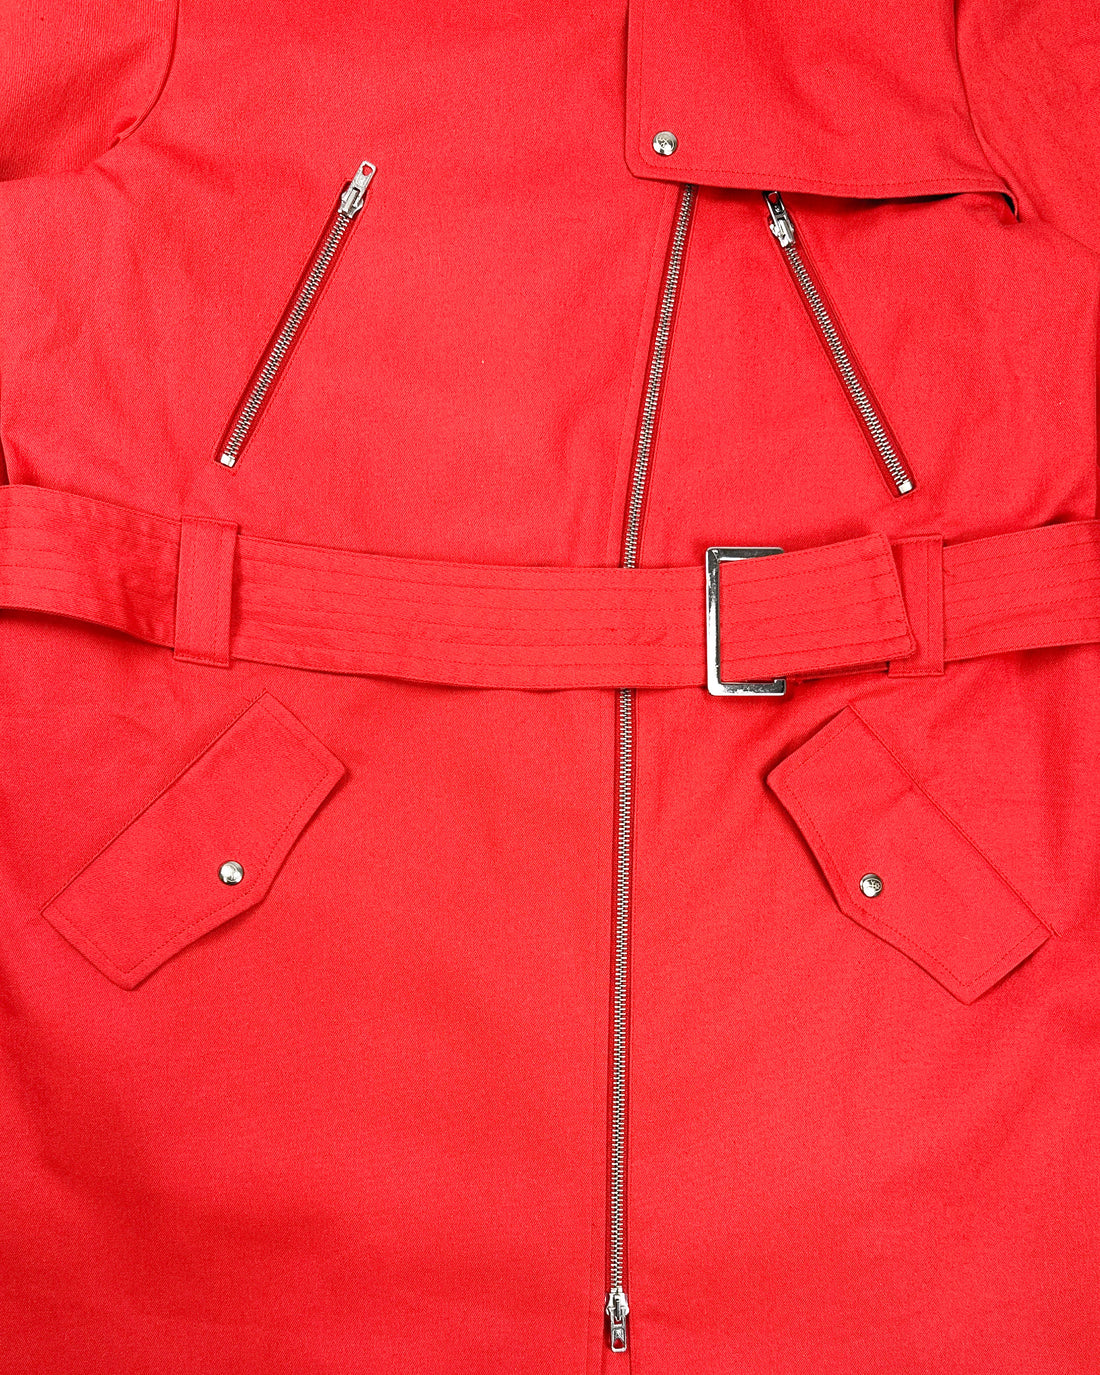 JC Castelbajac Red Long Coat Jacket 2000's